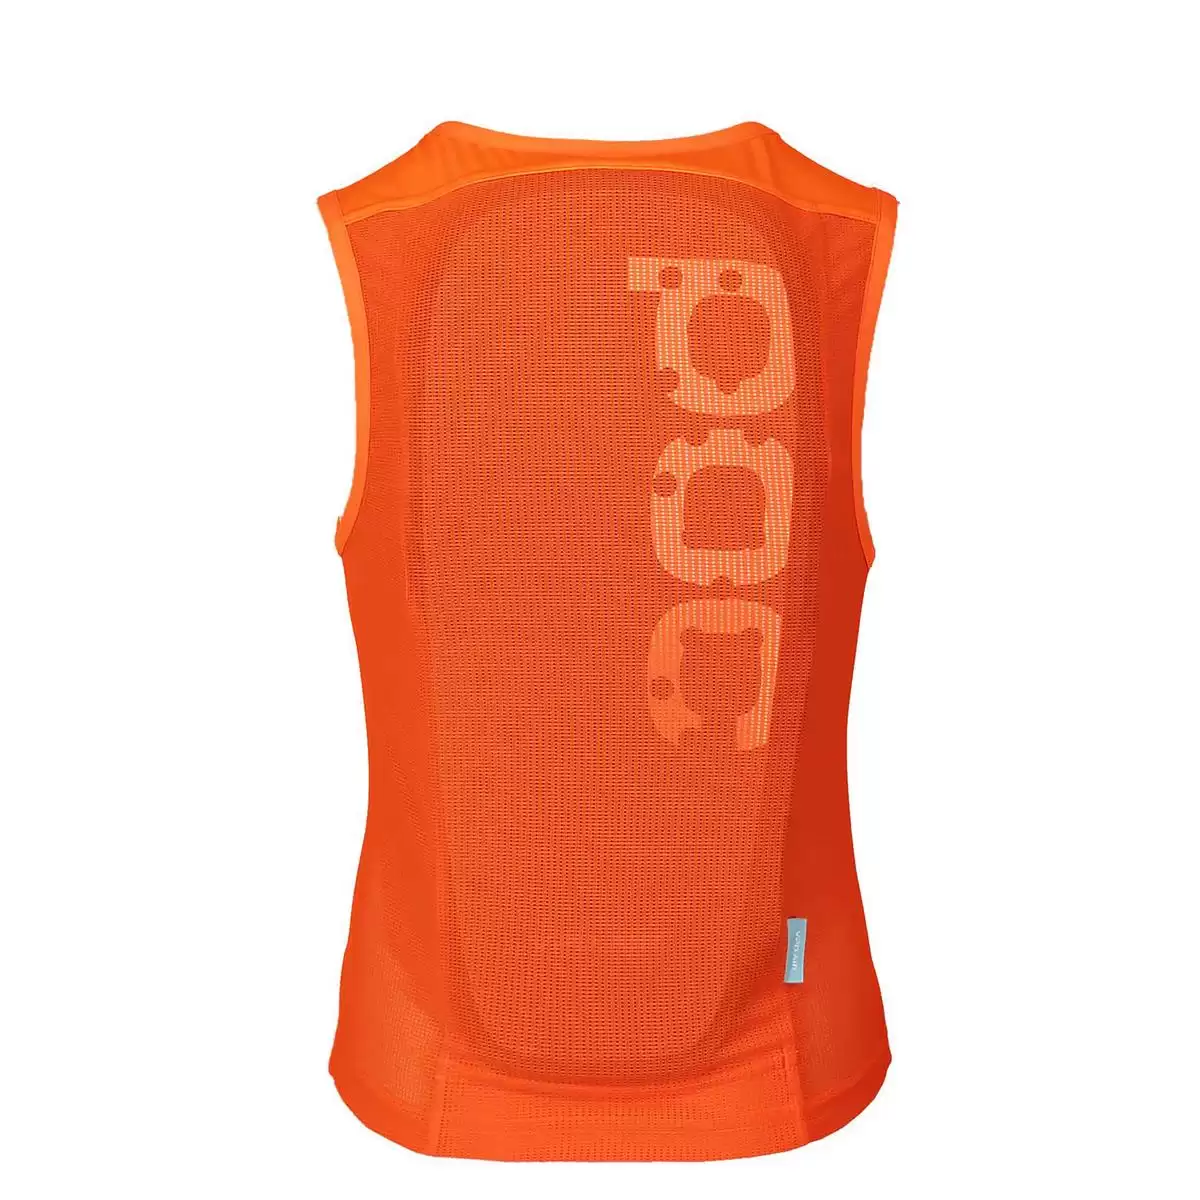 Kid POCito VPD Air Vest protective gilet Orange Size M #2